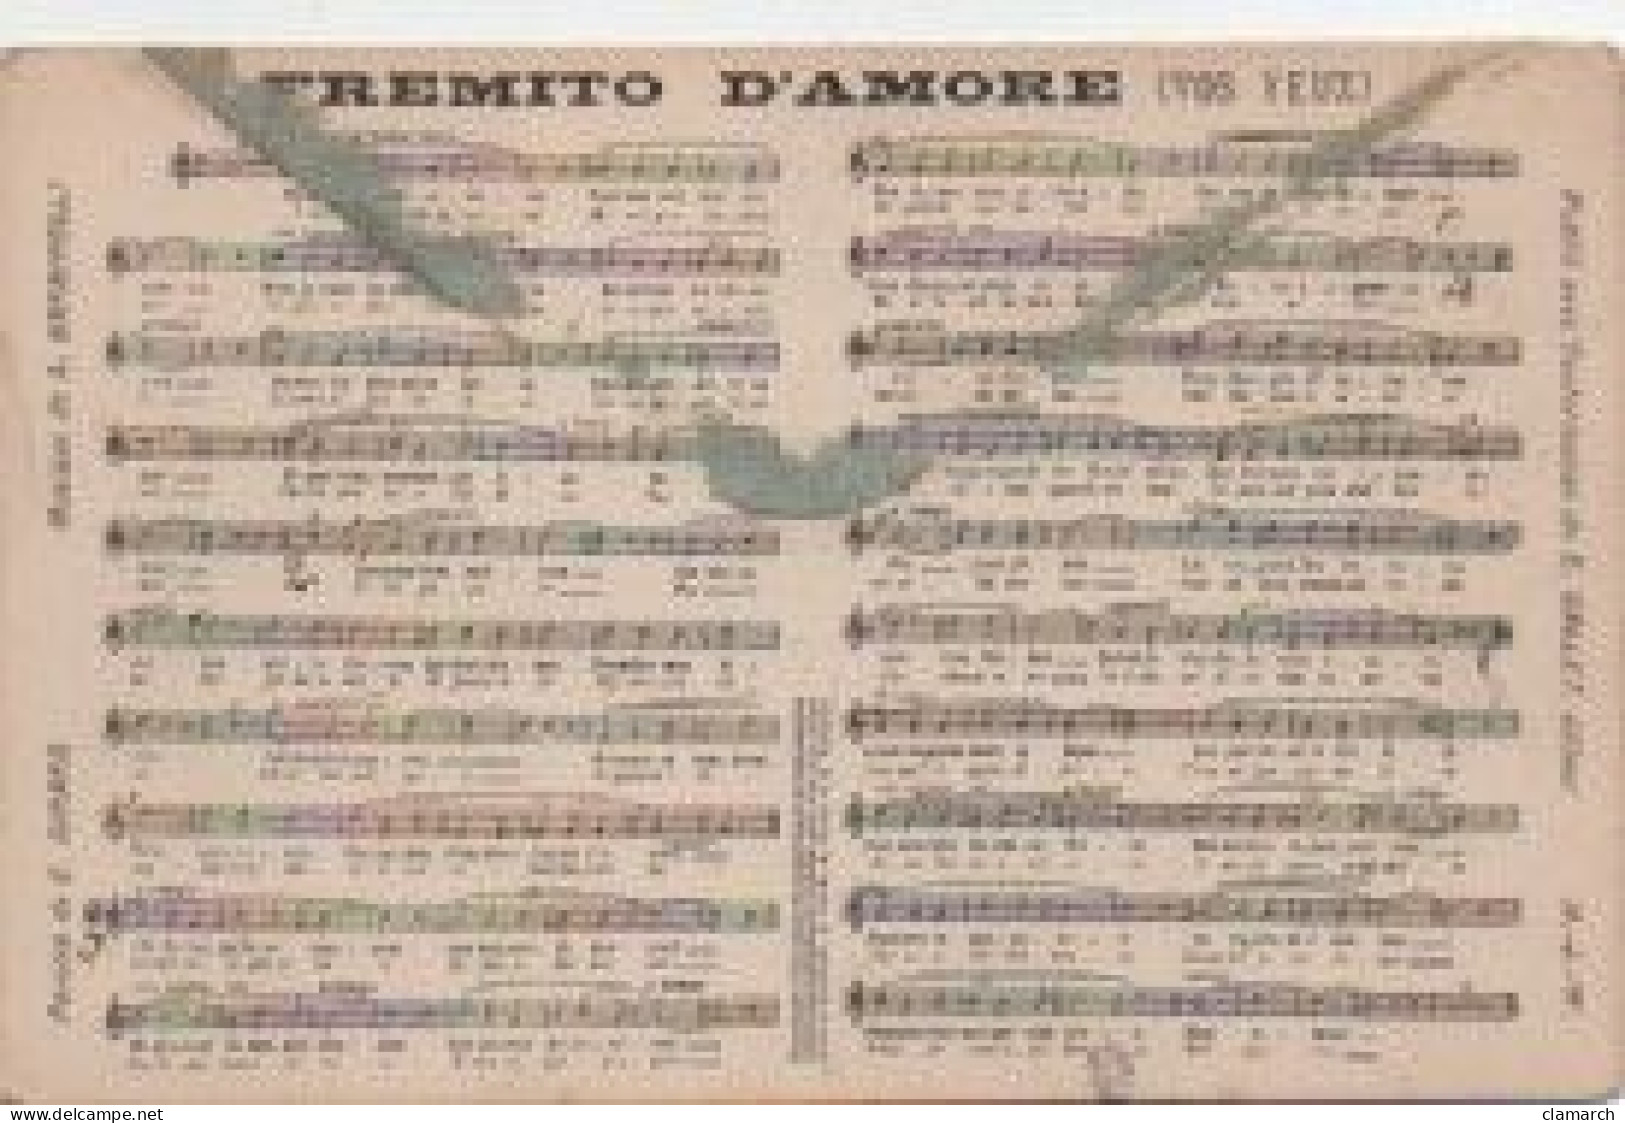 CHANSONS-FREMITO D'AMORE (Vos Yeux) Paroles D'E Girard, Musique D'A Barbirolli - HJW - Musica